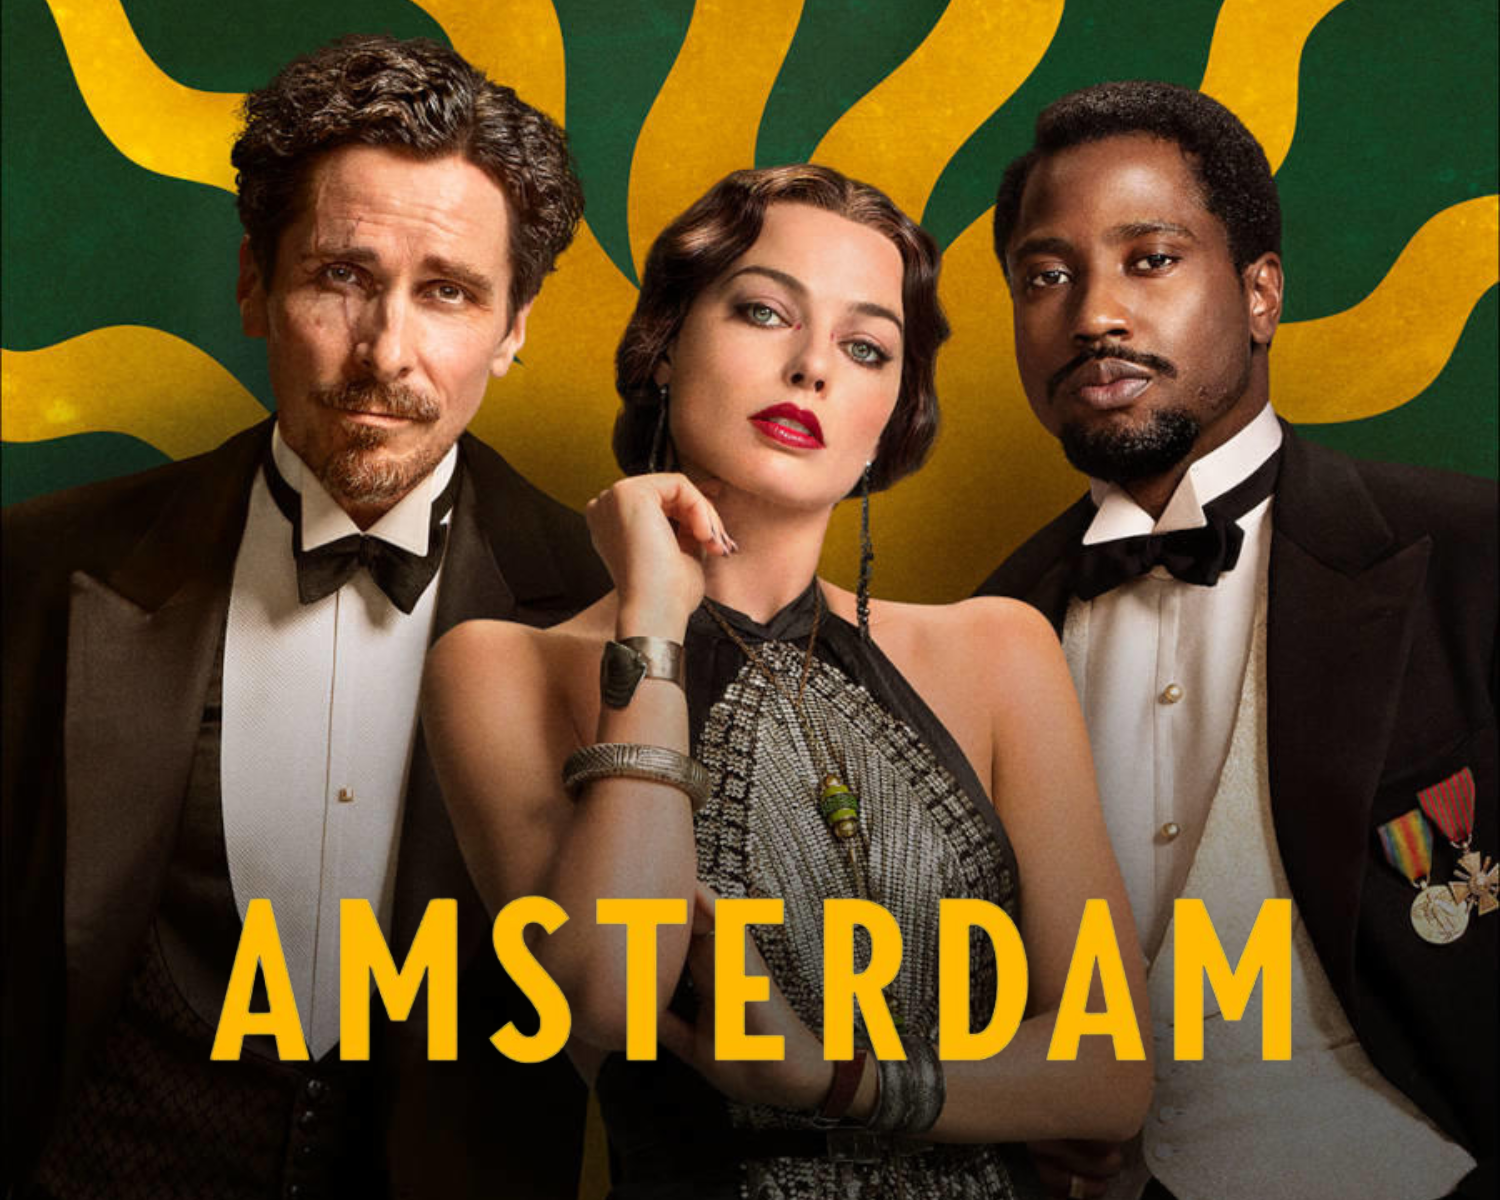 Christian Bale, Margot Robbie and John David Washington star in David O. Russell's Amsterdam